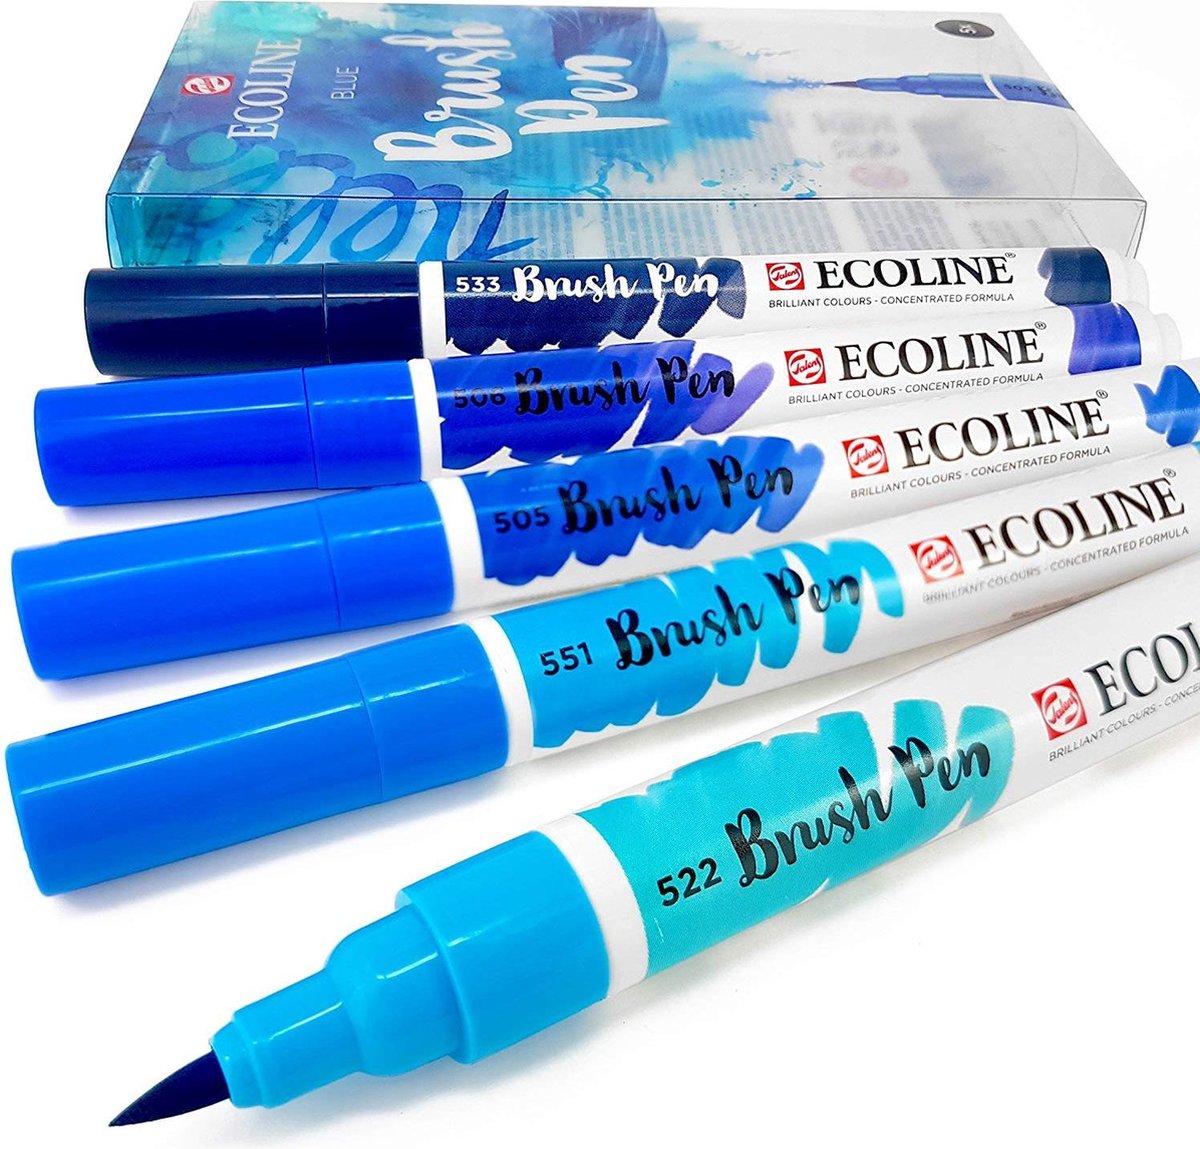 Talens Ecoline Brushpen Set met 5 Pennen (Blauw) + 1 Brush Pen Blender verpakt in een handige Zipperbag + 1 x A4 Ecoline/aquarelblok + Basis Boekje Brush/Handlettering